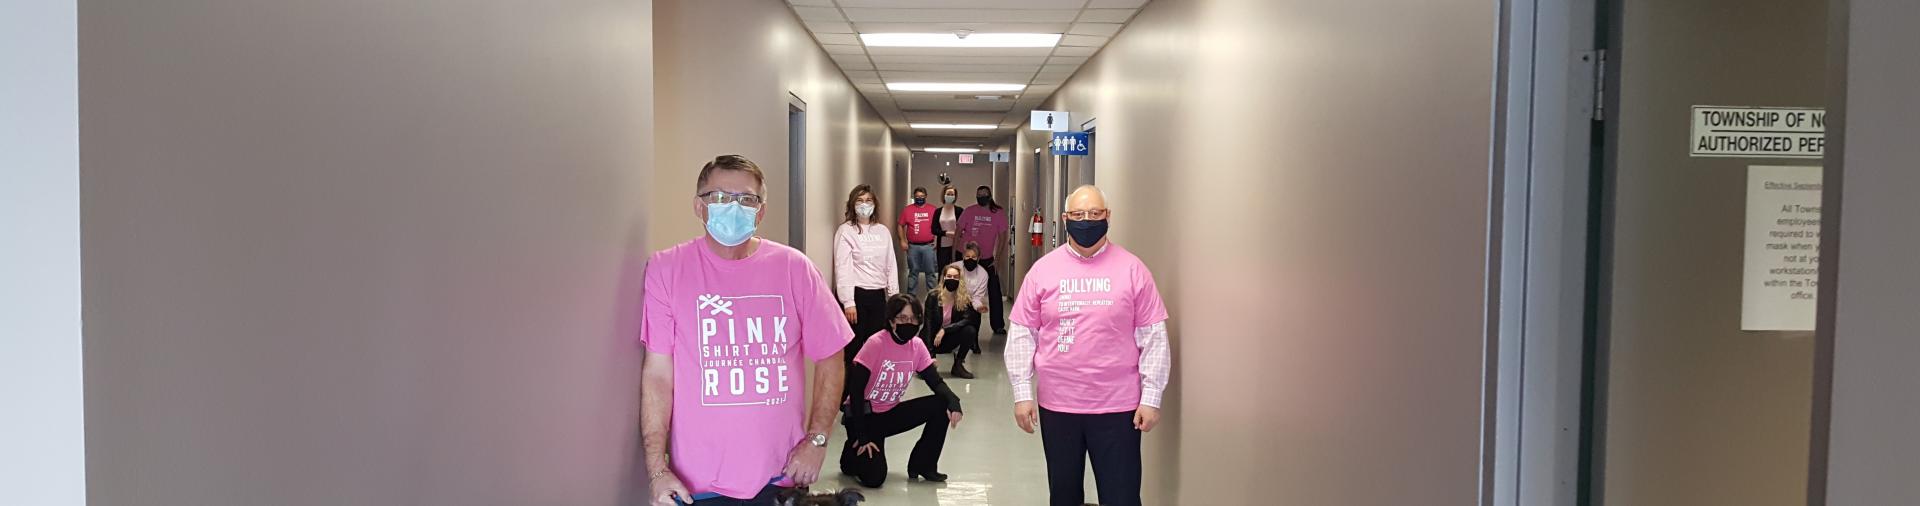 Township Staff against bullying t-shirt hallway photo